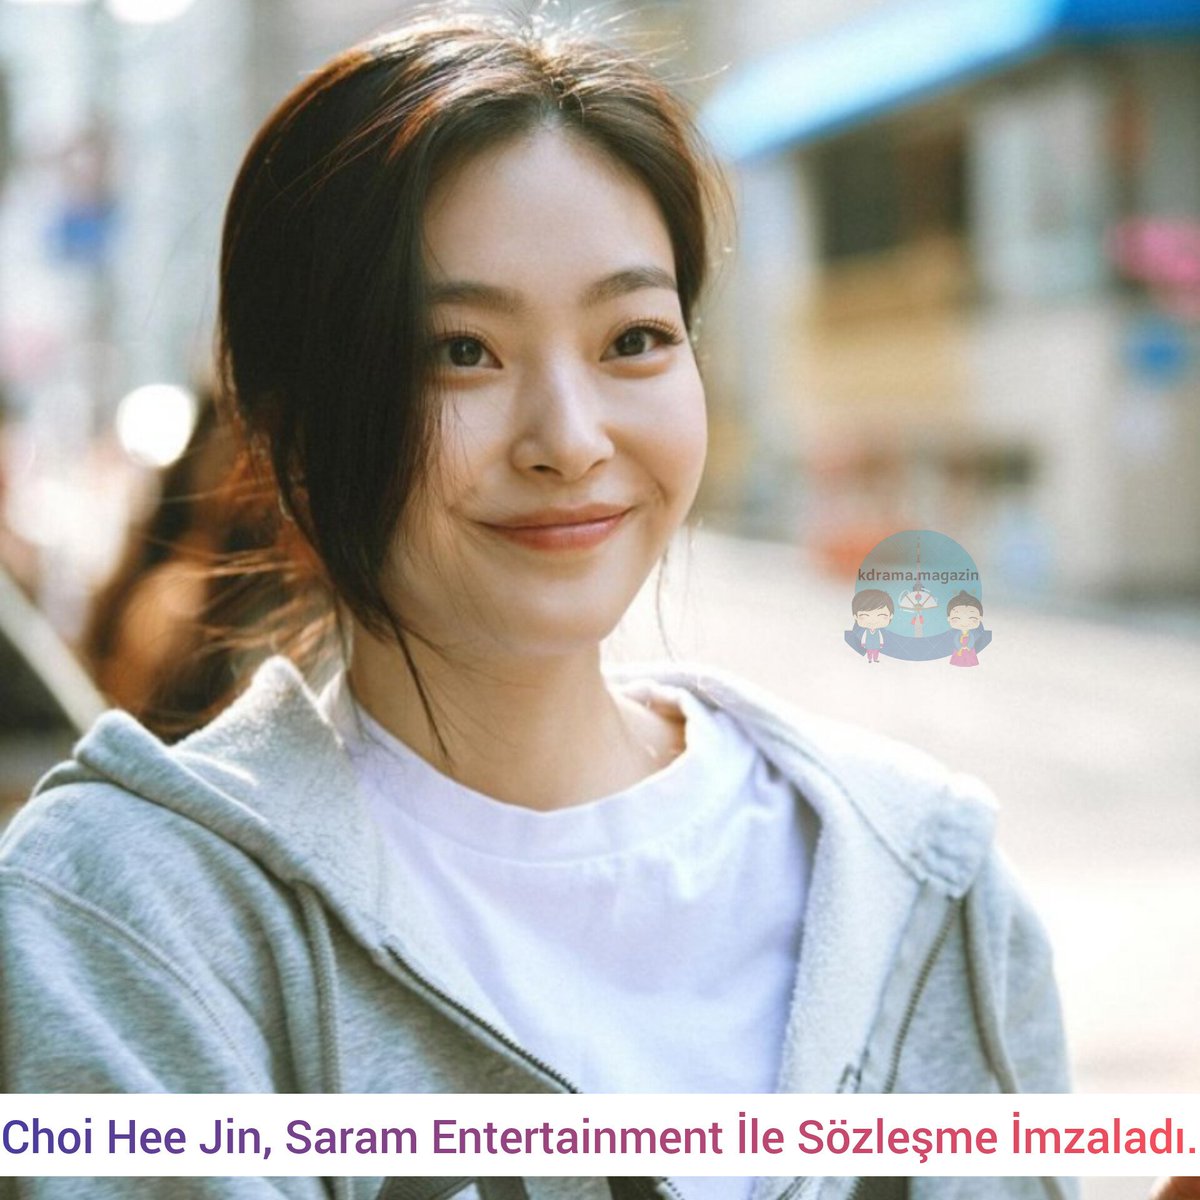 #ChoiHeeJin, Saram Entertainment İle Sözleşme İmzaladı. 

#HoneyLee #ChoJinWoong #LeeHaNee #RoyalLoader #조진웅 #로얄로더 #이하늬 #최희진